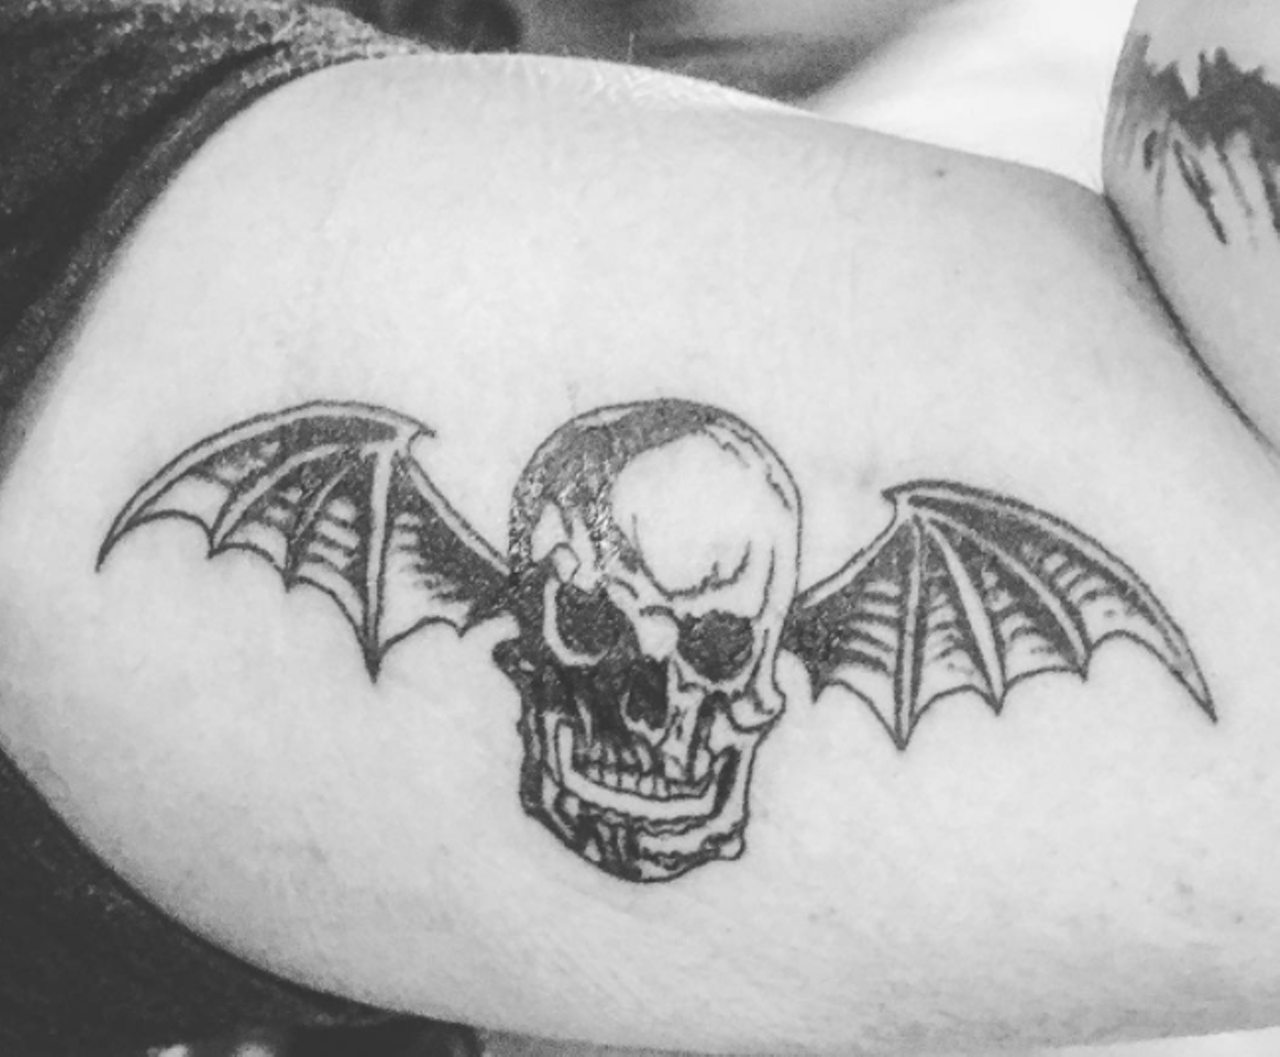 Ink'd Tattoo Studio
4436 Culebra Rd., (210) 663-0481, facebook.com
Photo via Instagram, bflores210